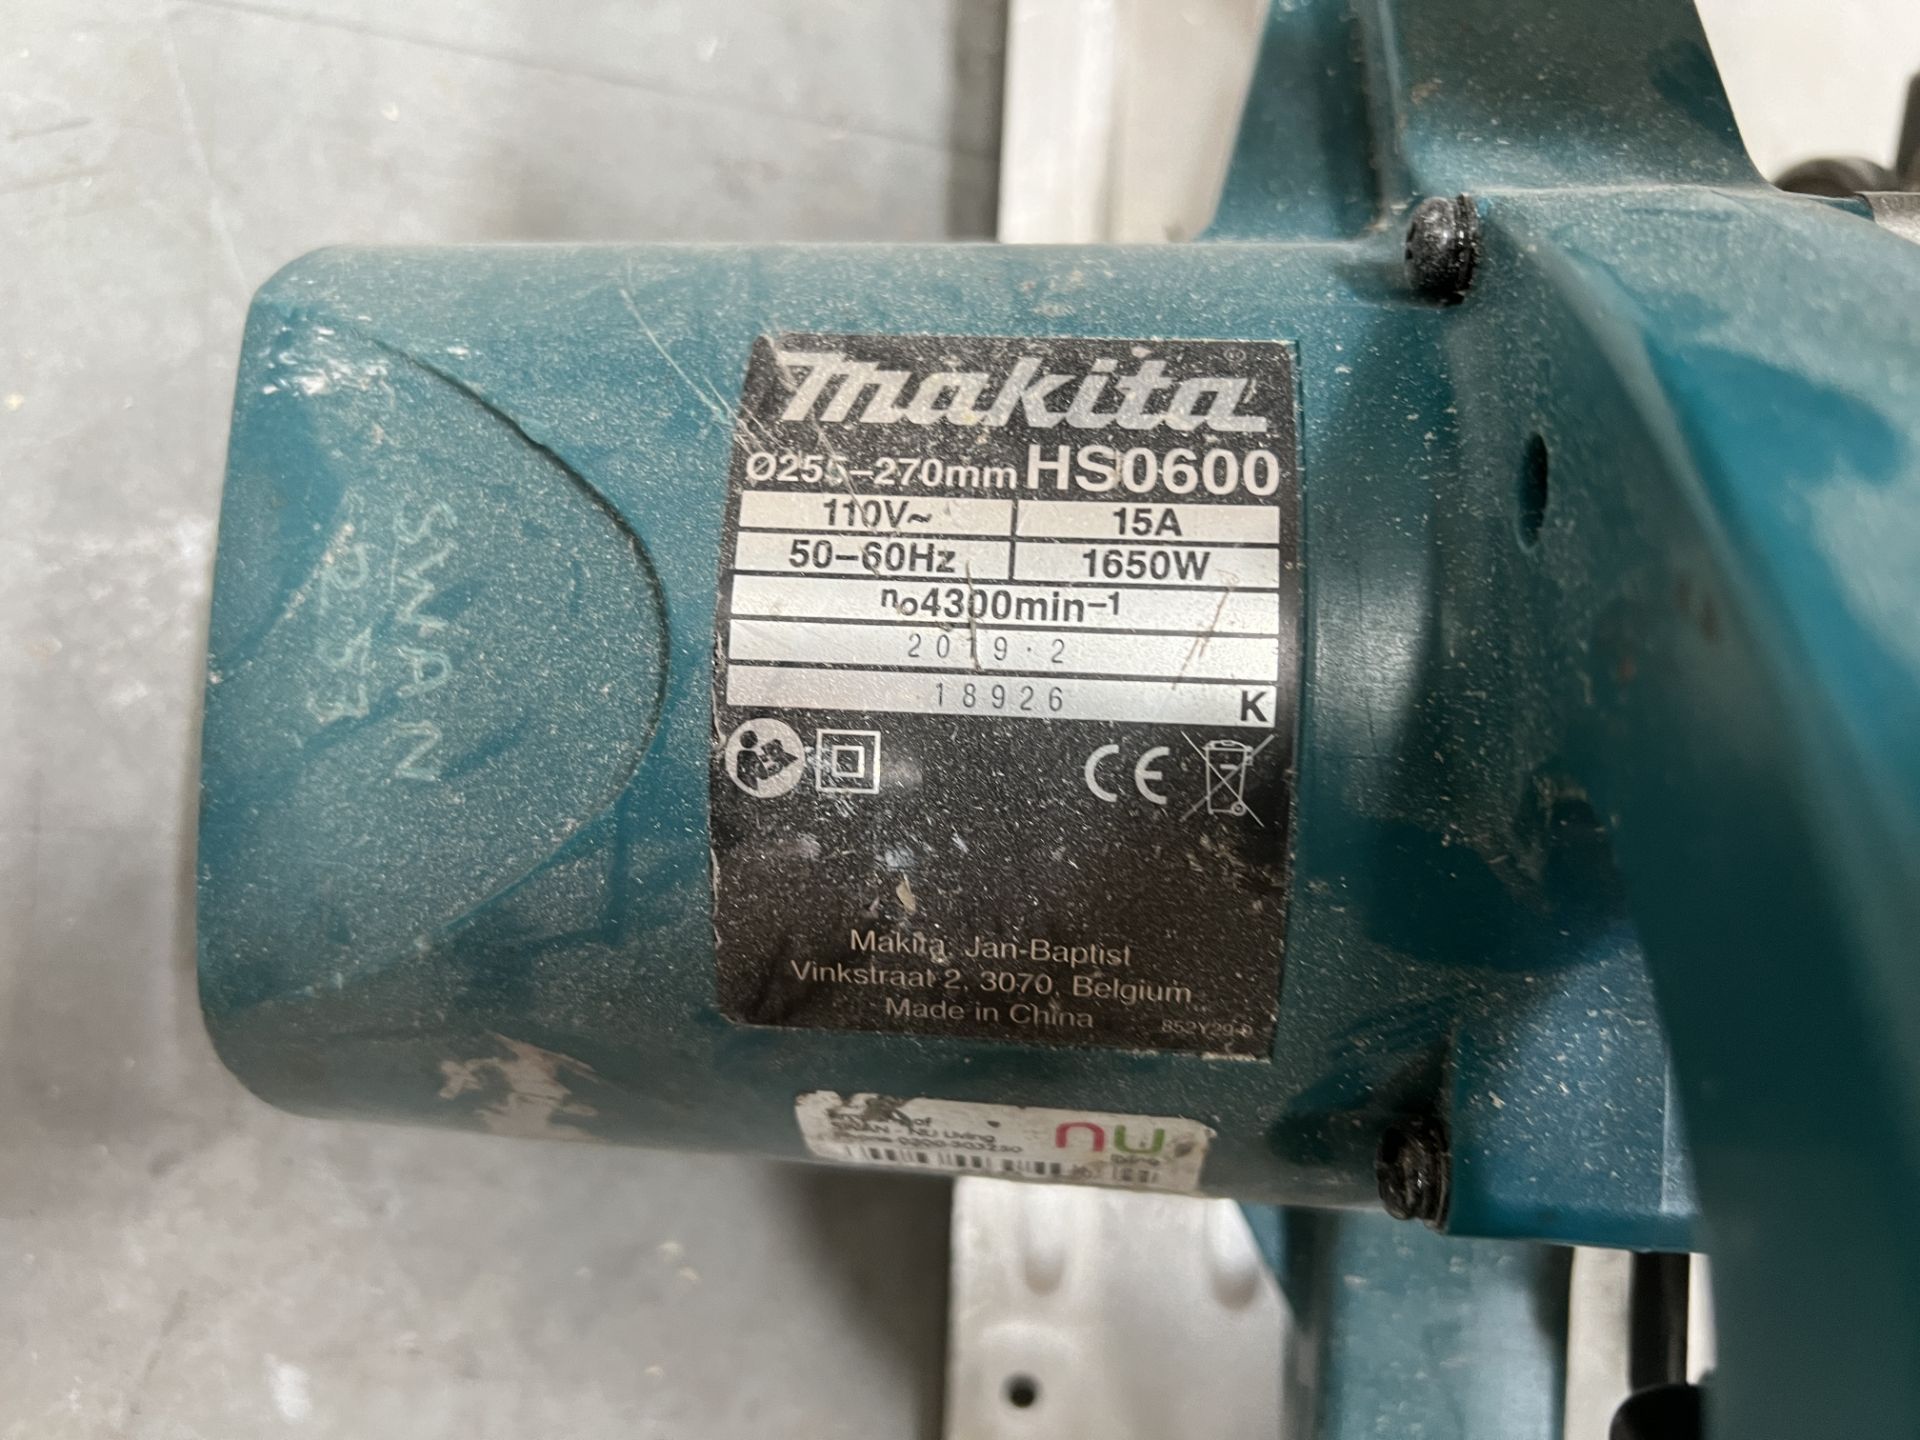 Makita, HS0600 circular saw, 110 volt, 1650w (DOM: 2019) - Image 3 of 4